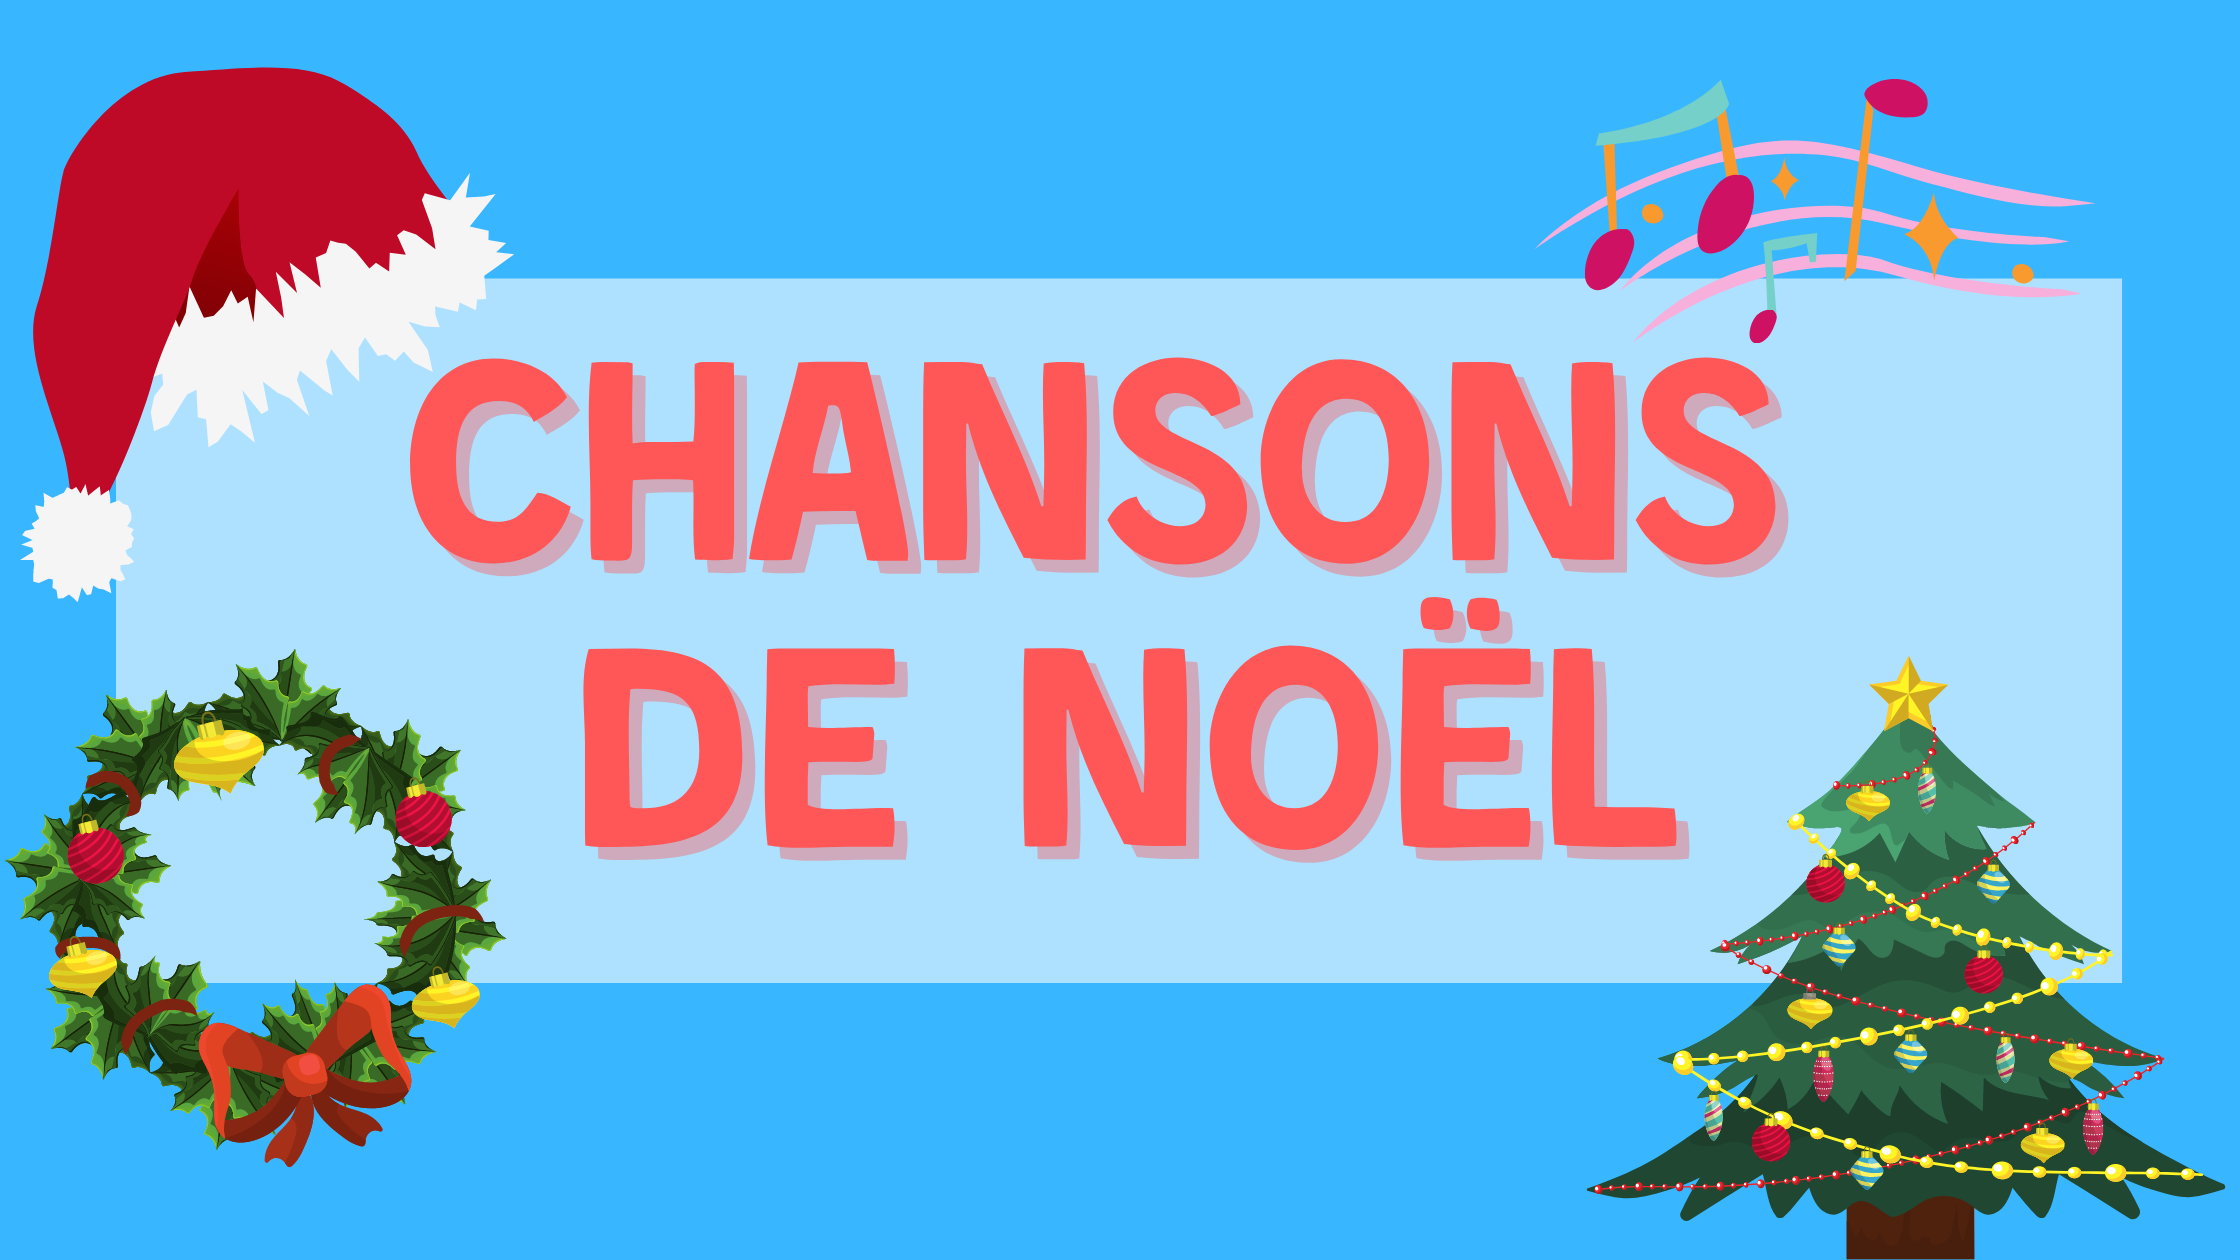 Chansons De Noël, 10 Fun French Christmas Songs